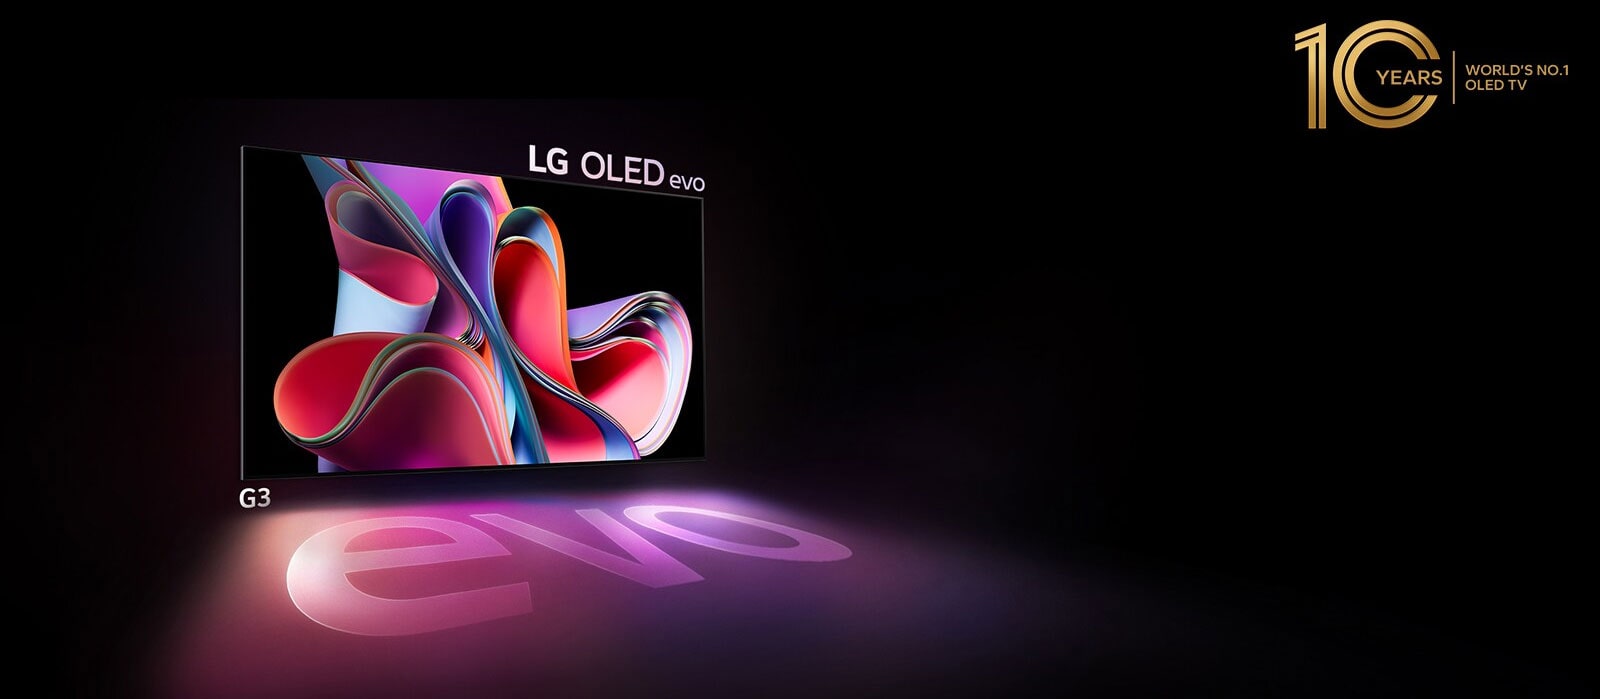 LG OLED G3 evo در فضای تاریک به روشنی می‌درخشد. و در بالا و سمت راست، لوگوی مربوط به جشن دهمین سالگرد OLED قابل مشاهده است.